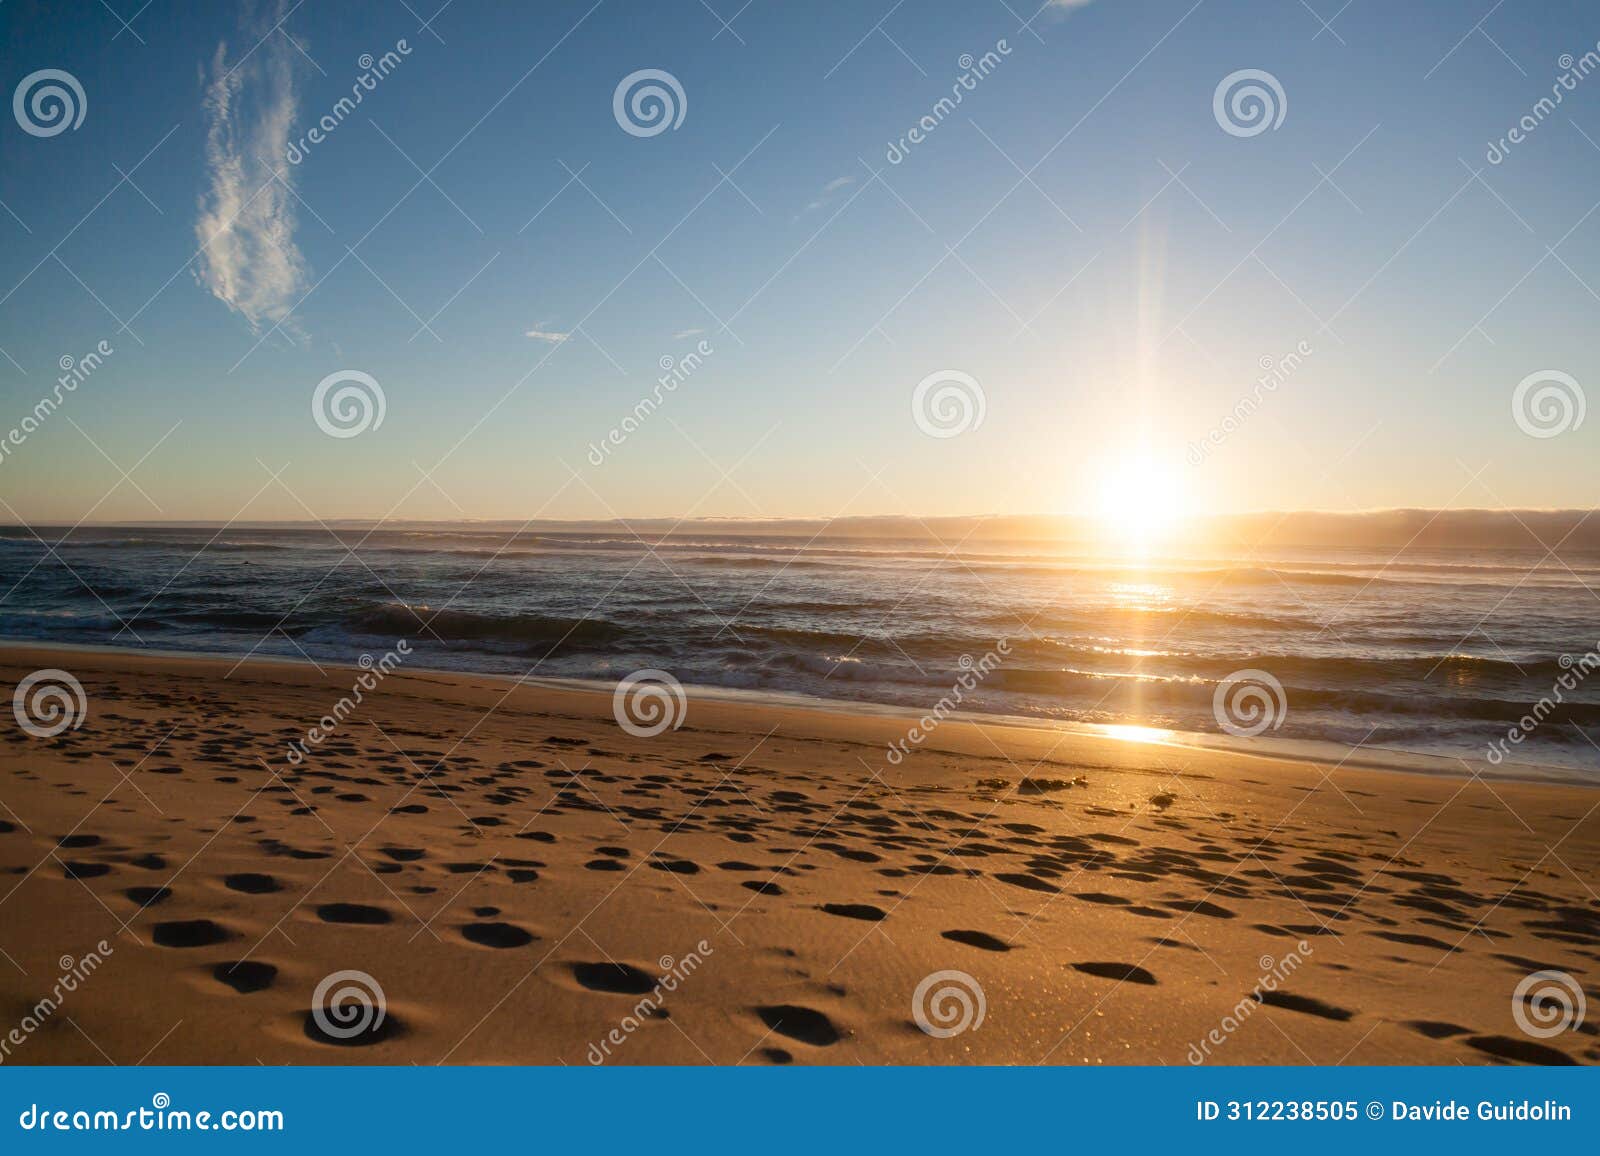 galician beach landscape, galicia, spain. do rostro beach